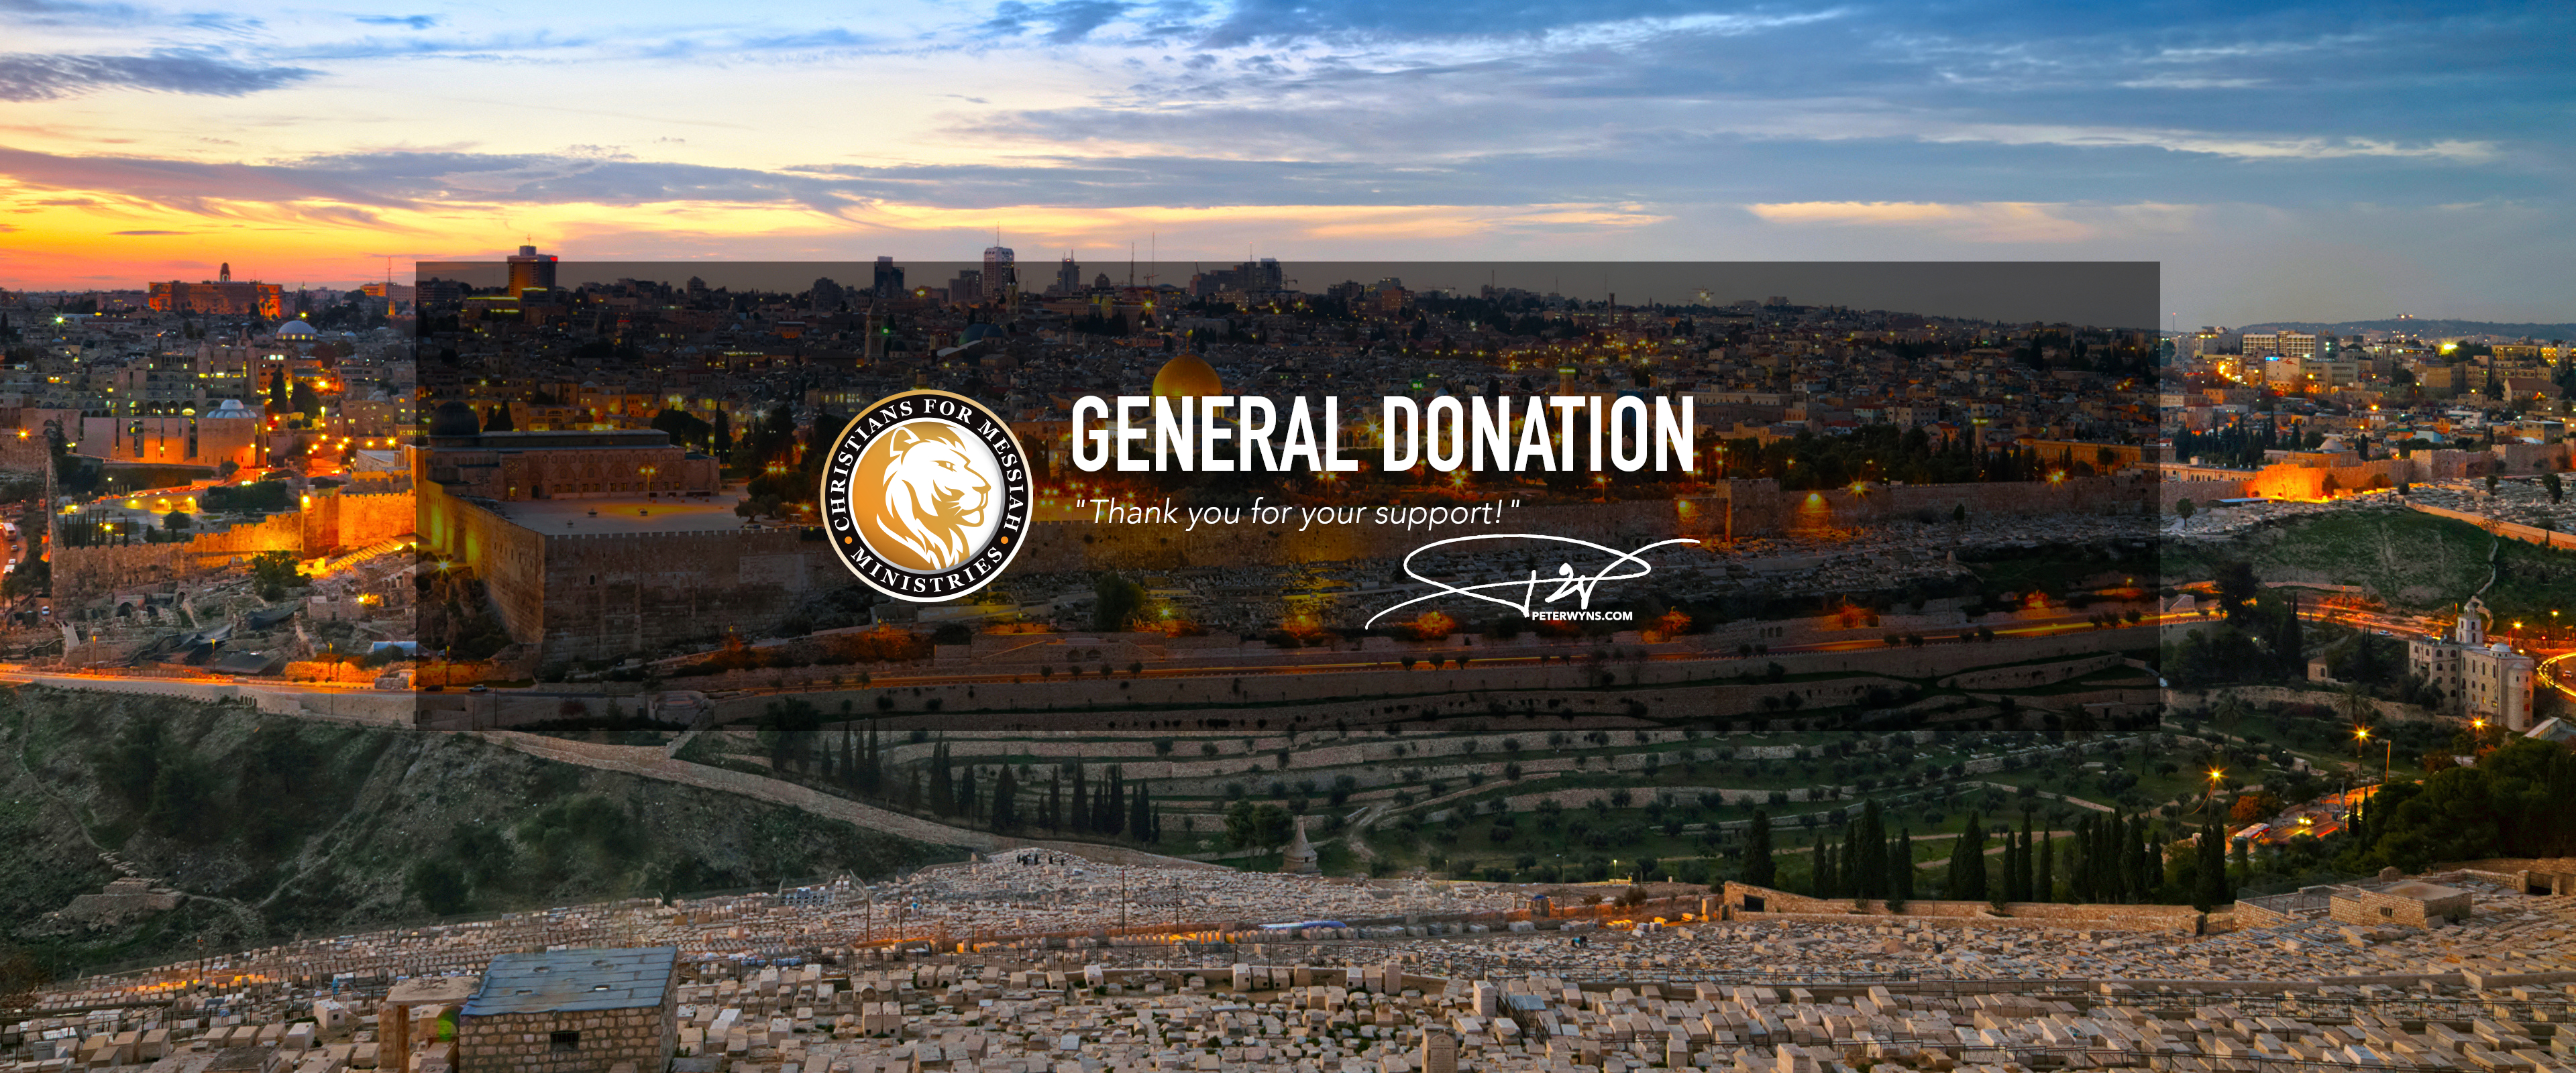 general donation banner final